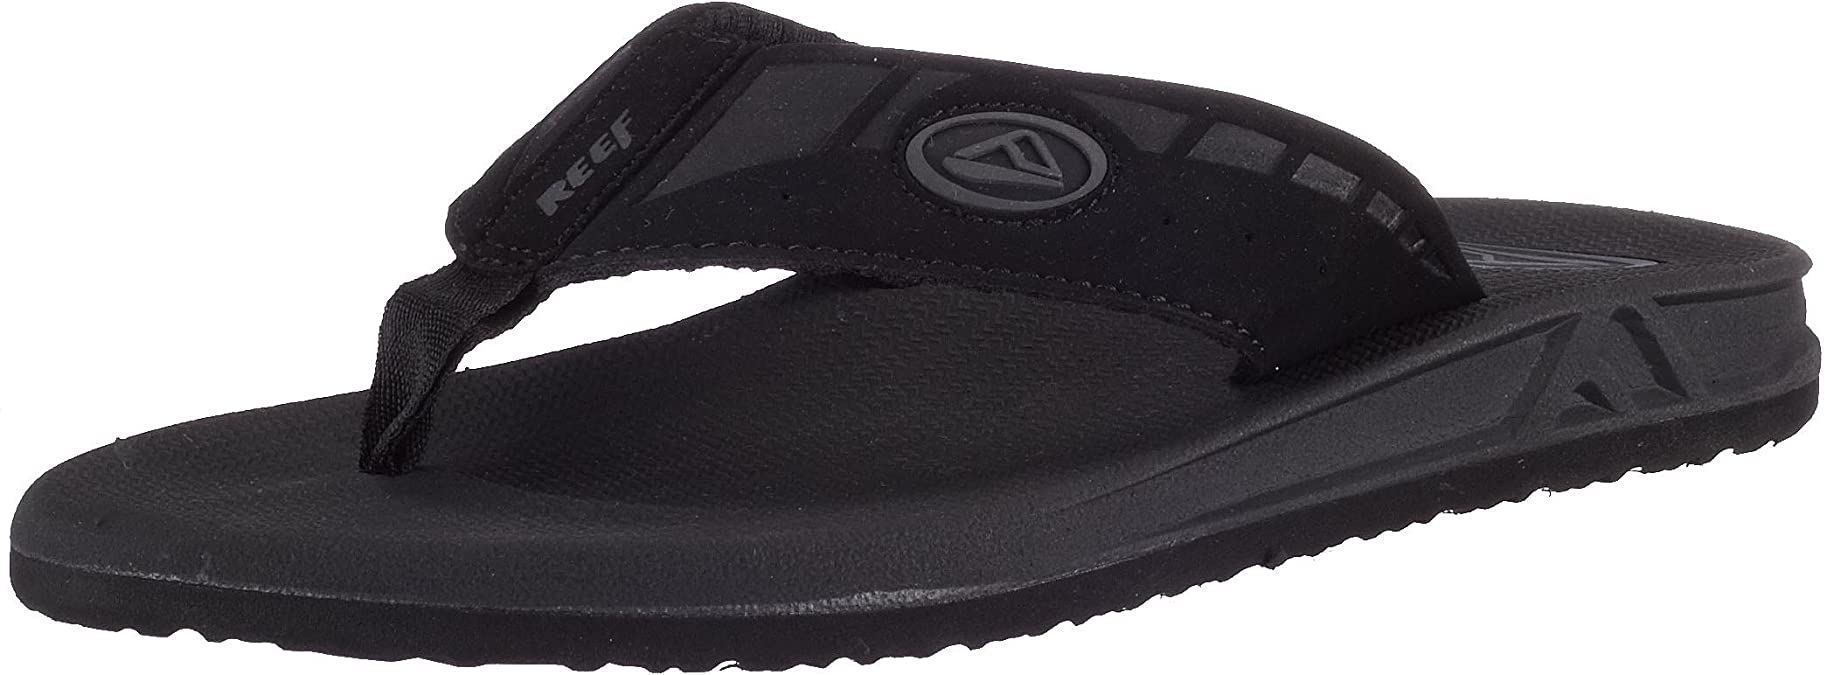 Reef Phantom Mens Sandals | Flip Flops For Men With Cushion Bounce Footbed | Waterproof